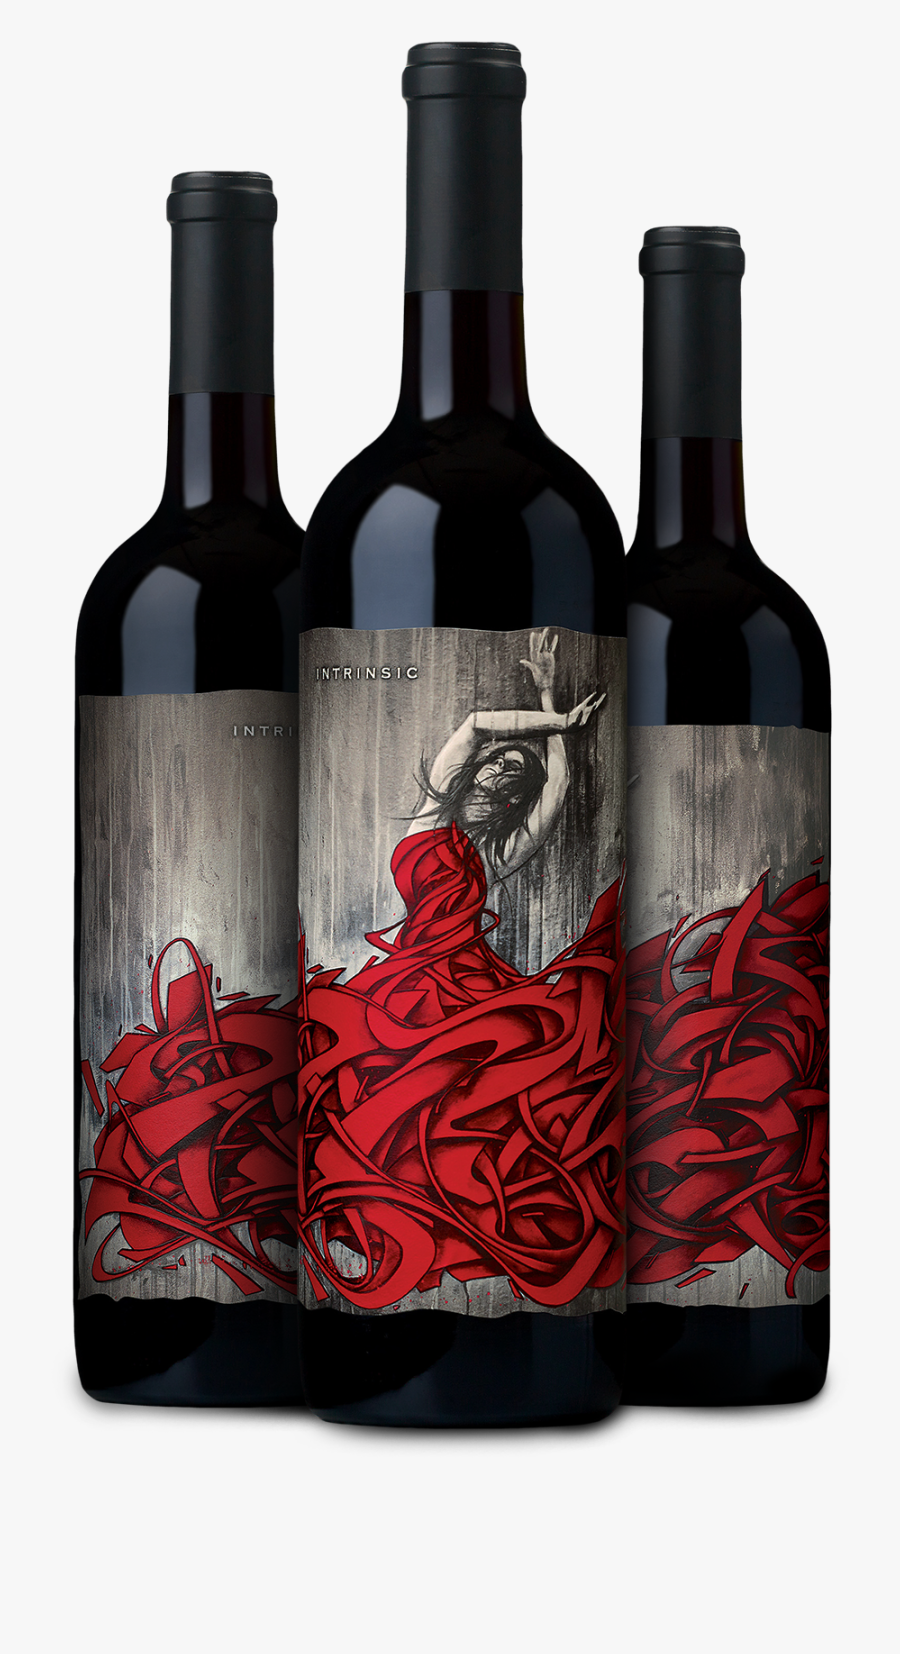 Clip Art Creative Wine Names - Intrinsic Cabernet Sauvignon 2015, Transparent Clipart